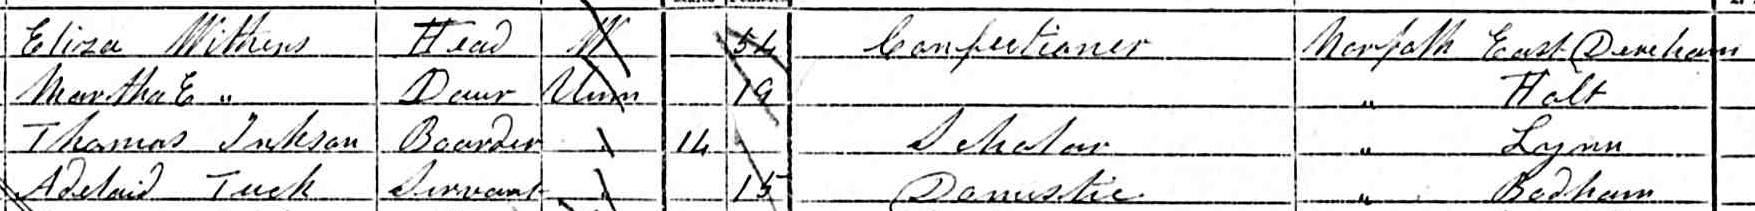 thomas henry 1871 census